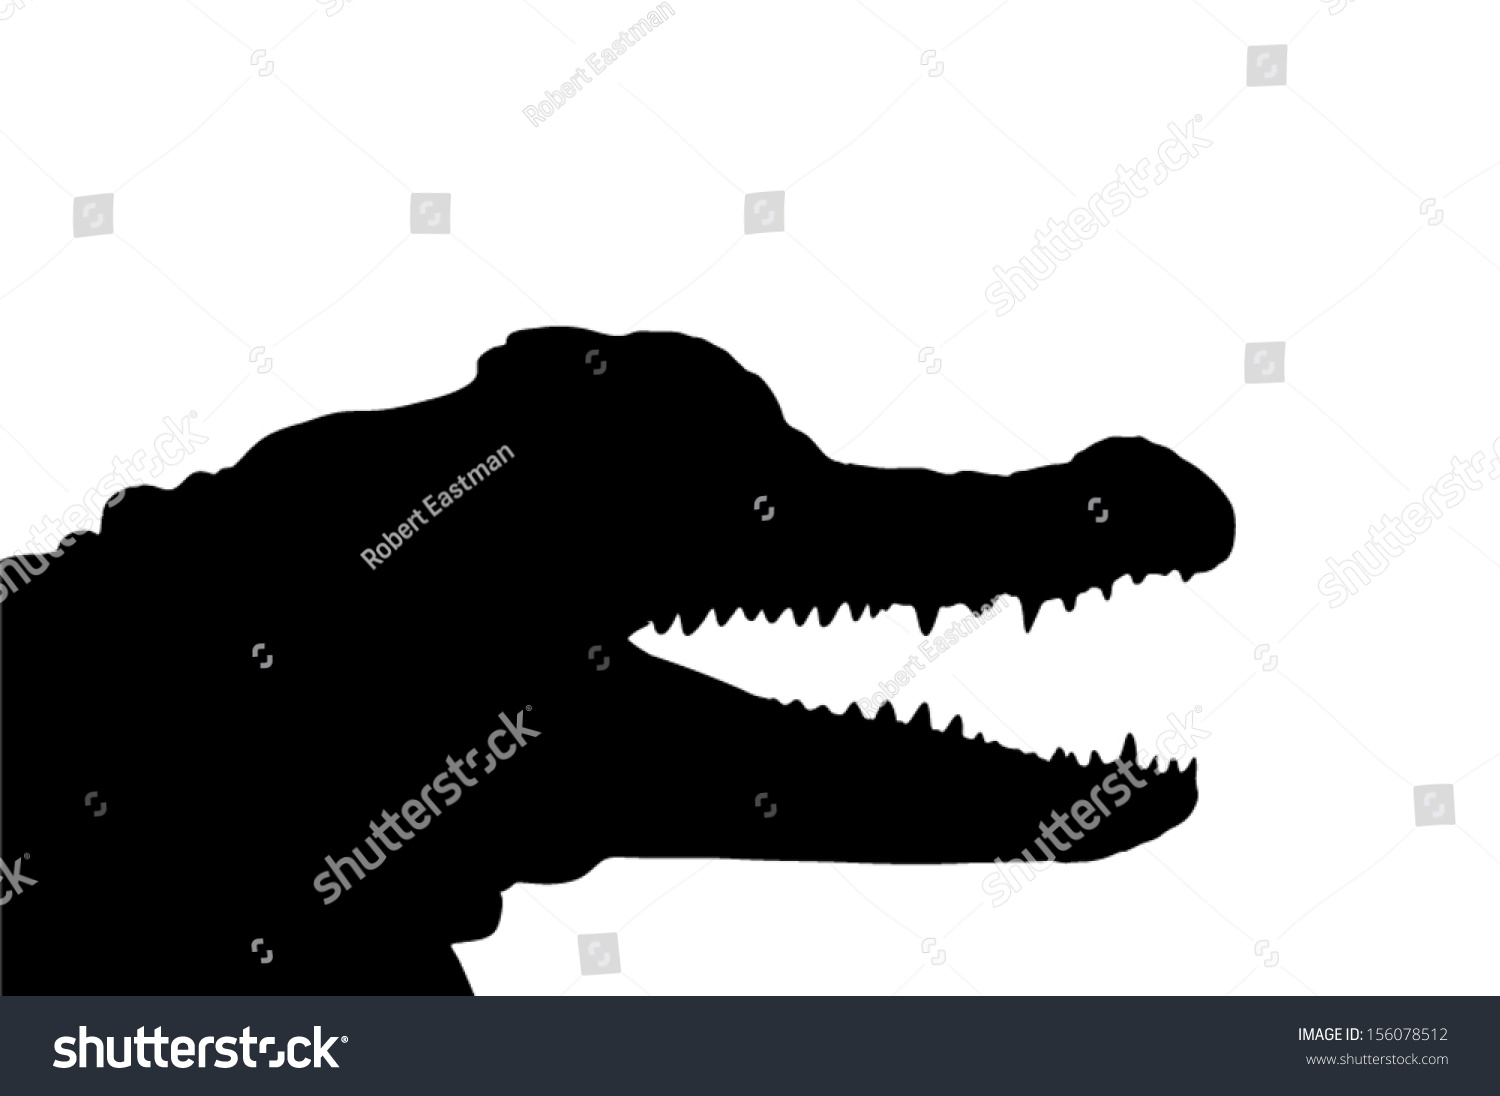 Download Vector Graphic Silhouette American Alligator Stock Vector ...